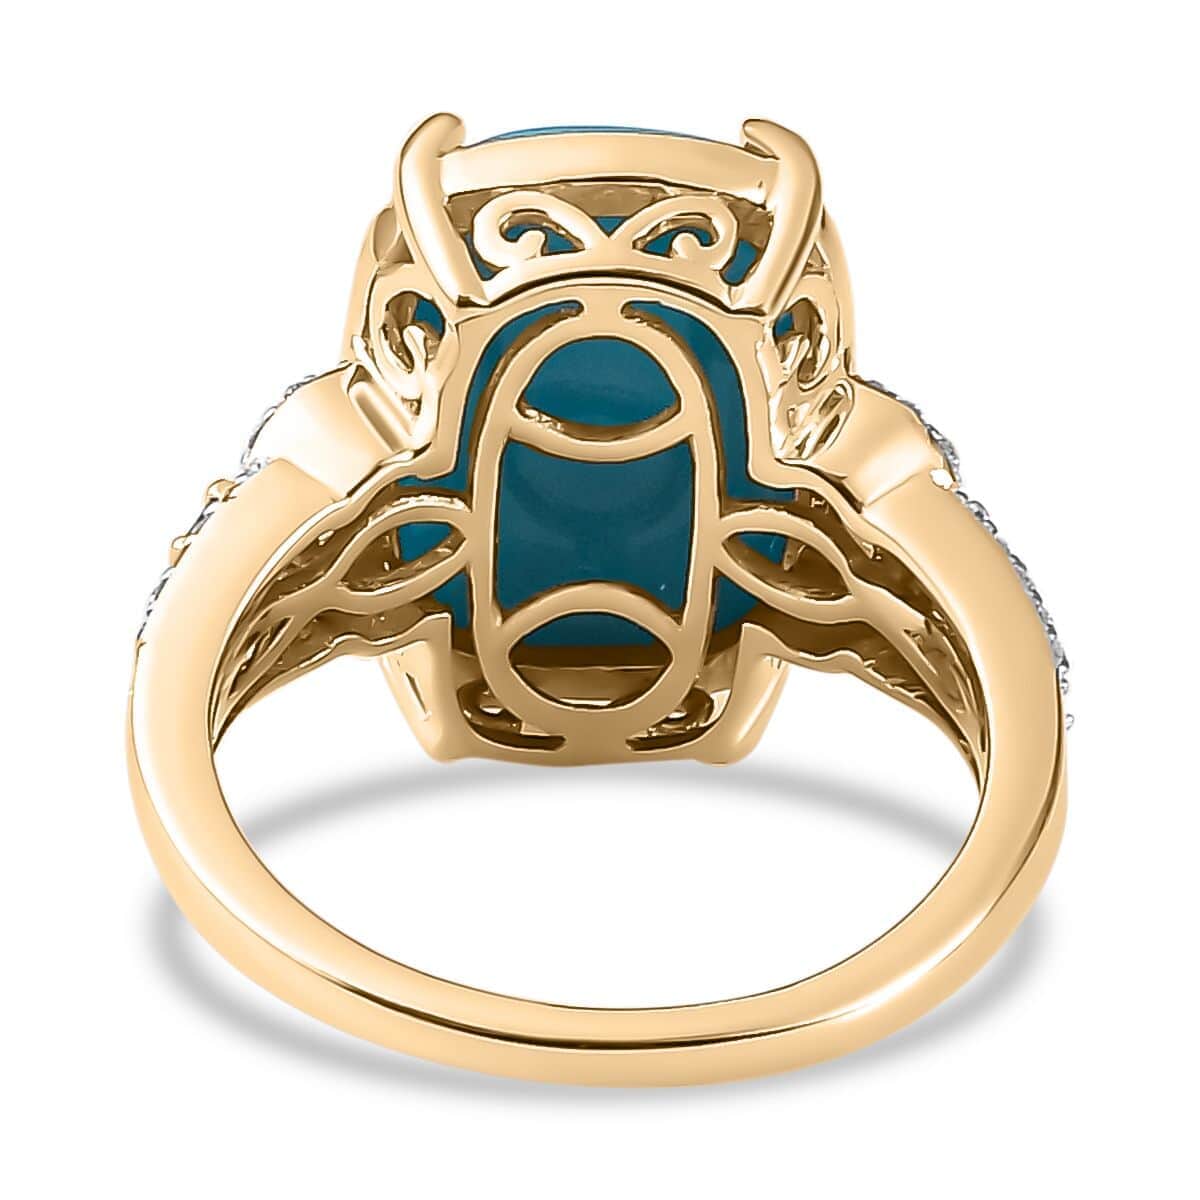 Luxoro 10K Yellow Gold Premium Sleeping Beauty Turquoise, Blue Diamond and Diamond G-H I2 Ring (Size 10.0) 4.25 Grams 8.40 ctw image number 4